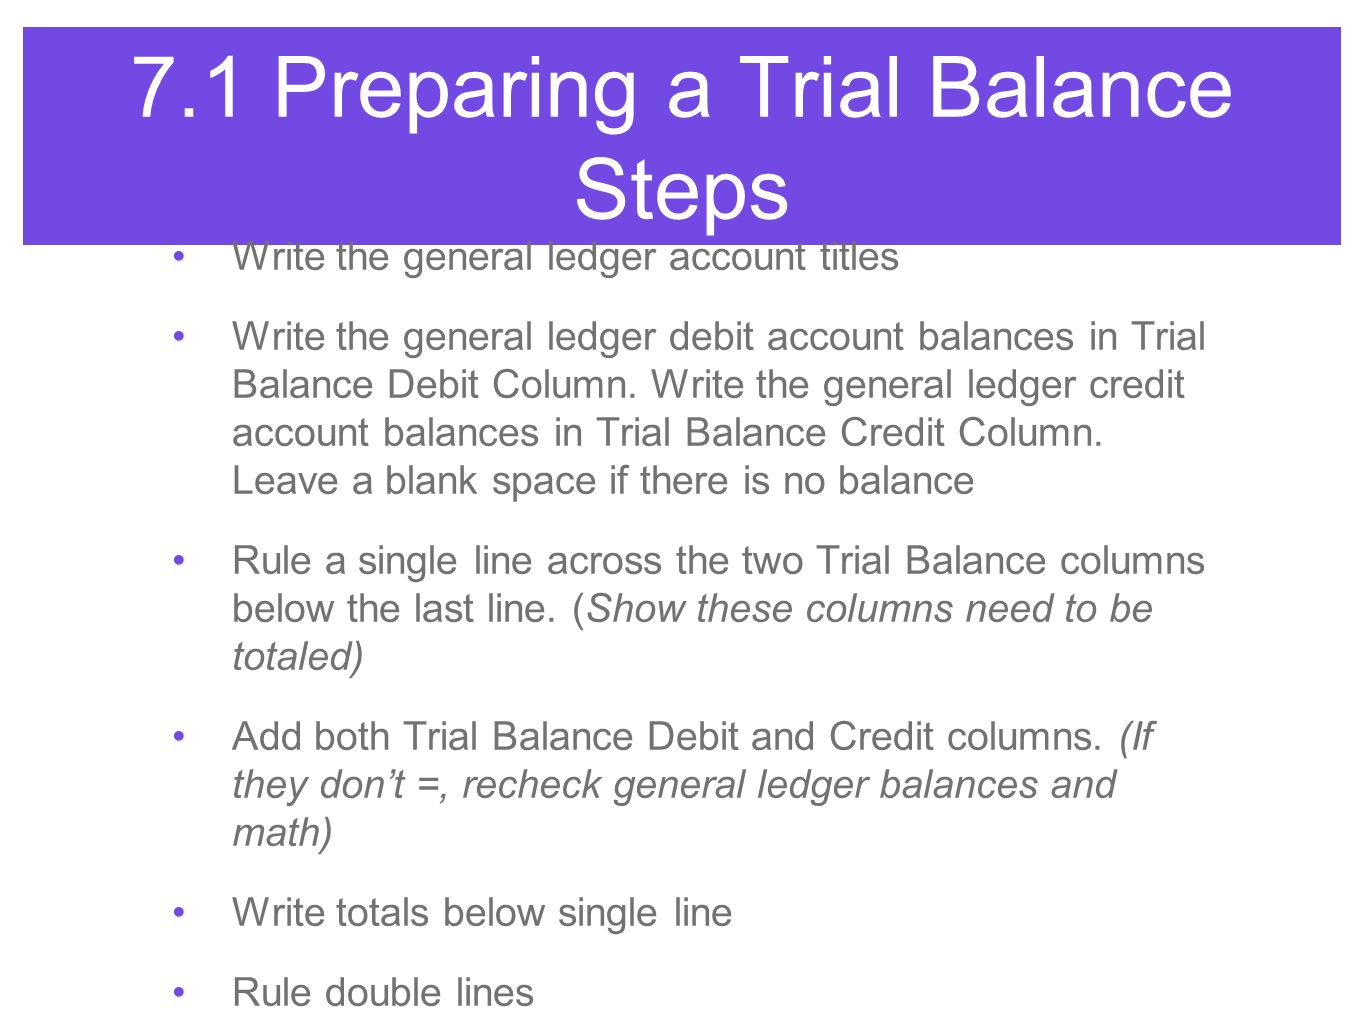 7.1 Preparing a Trial Balance Steps